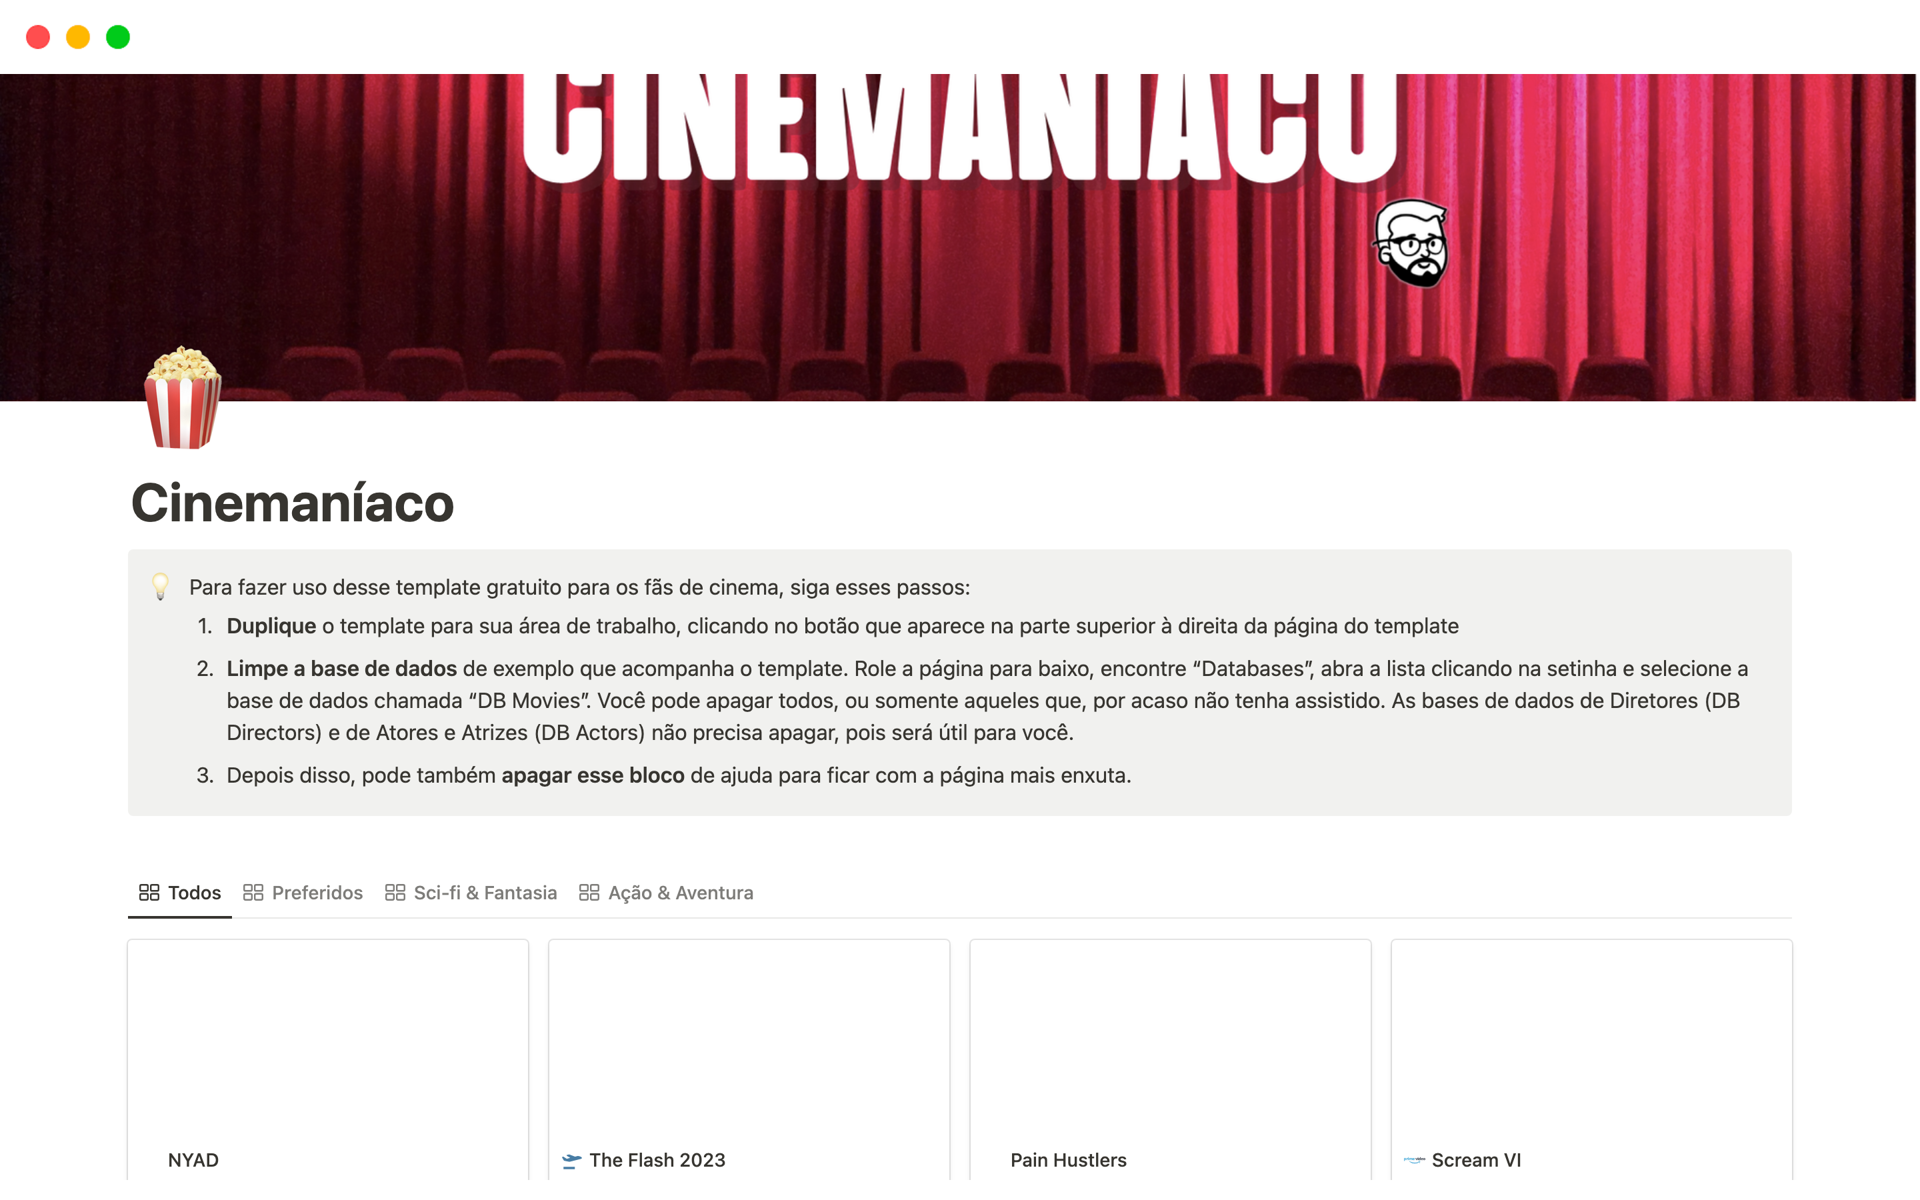 A template preview for Cinemaníaco